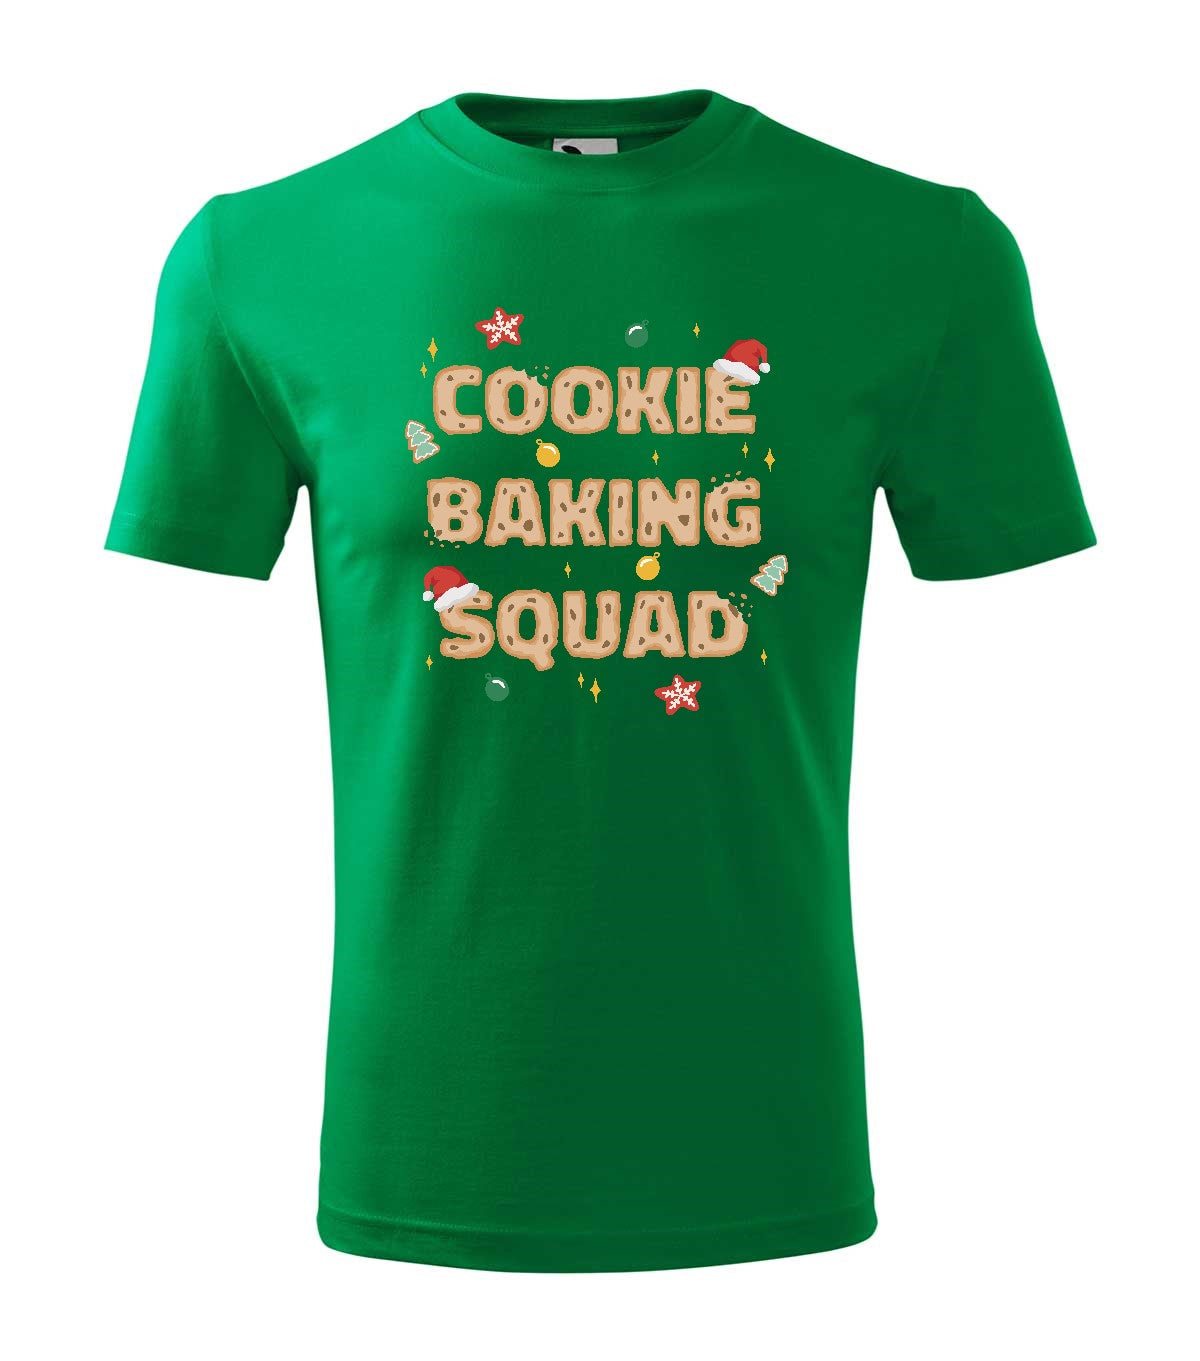 Cookie Baking Squad gyerek póló